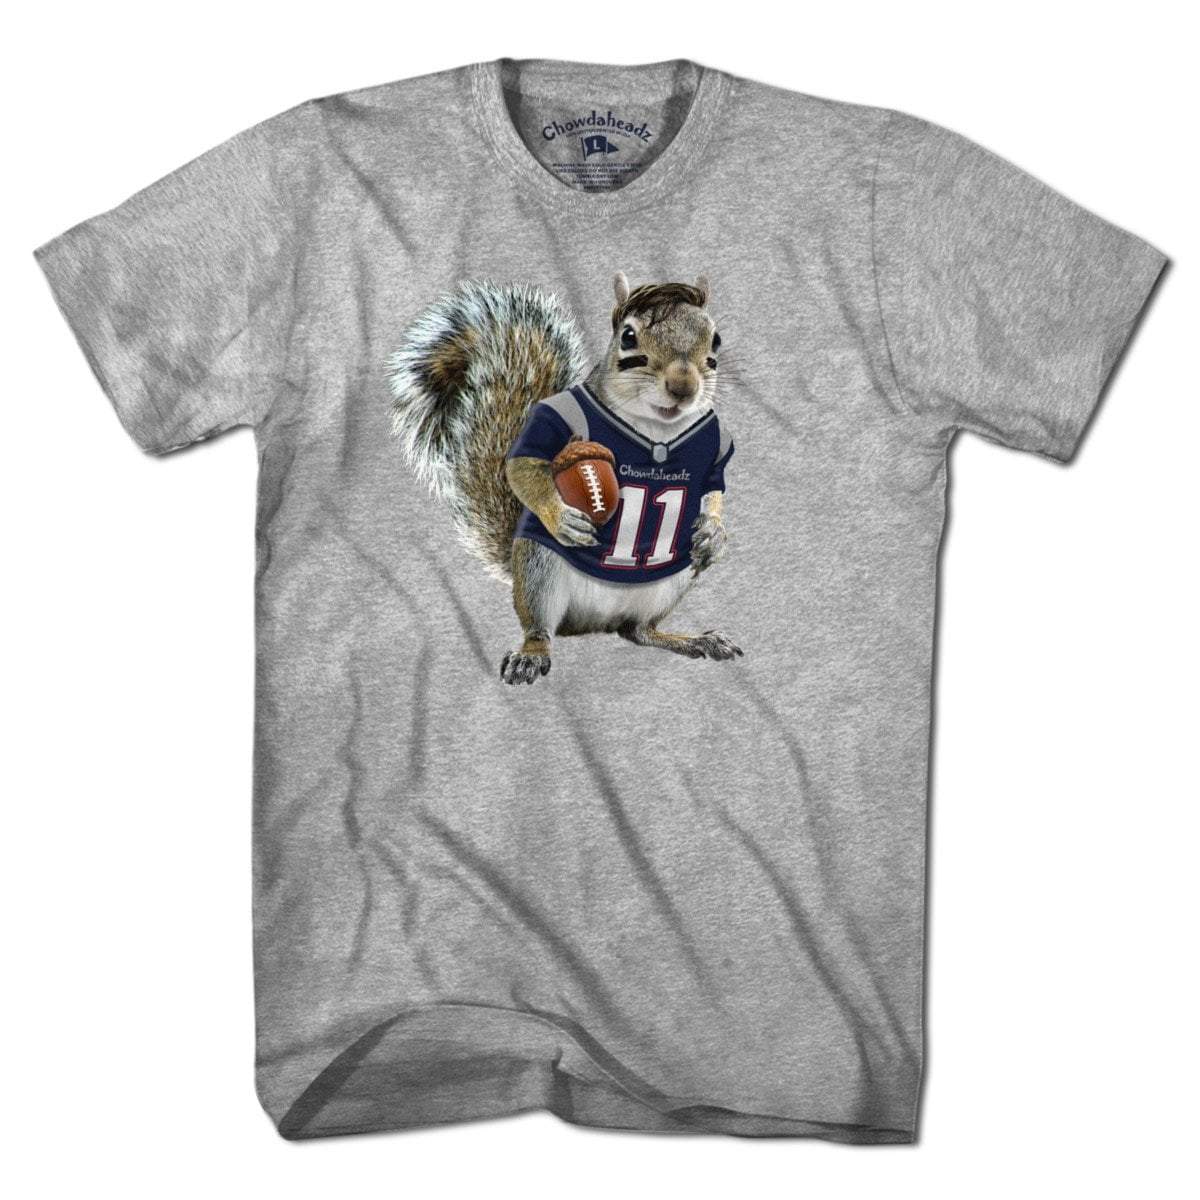 New England Squirrelman T-Shirt - Chowdaheadz